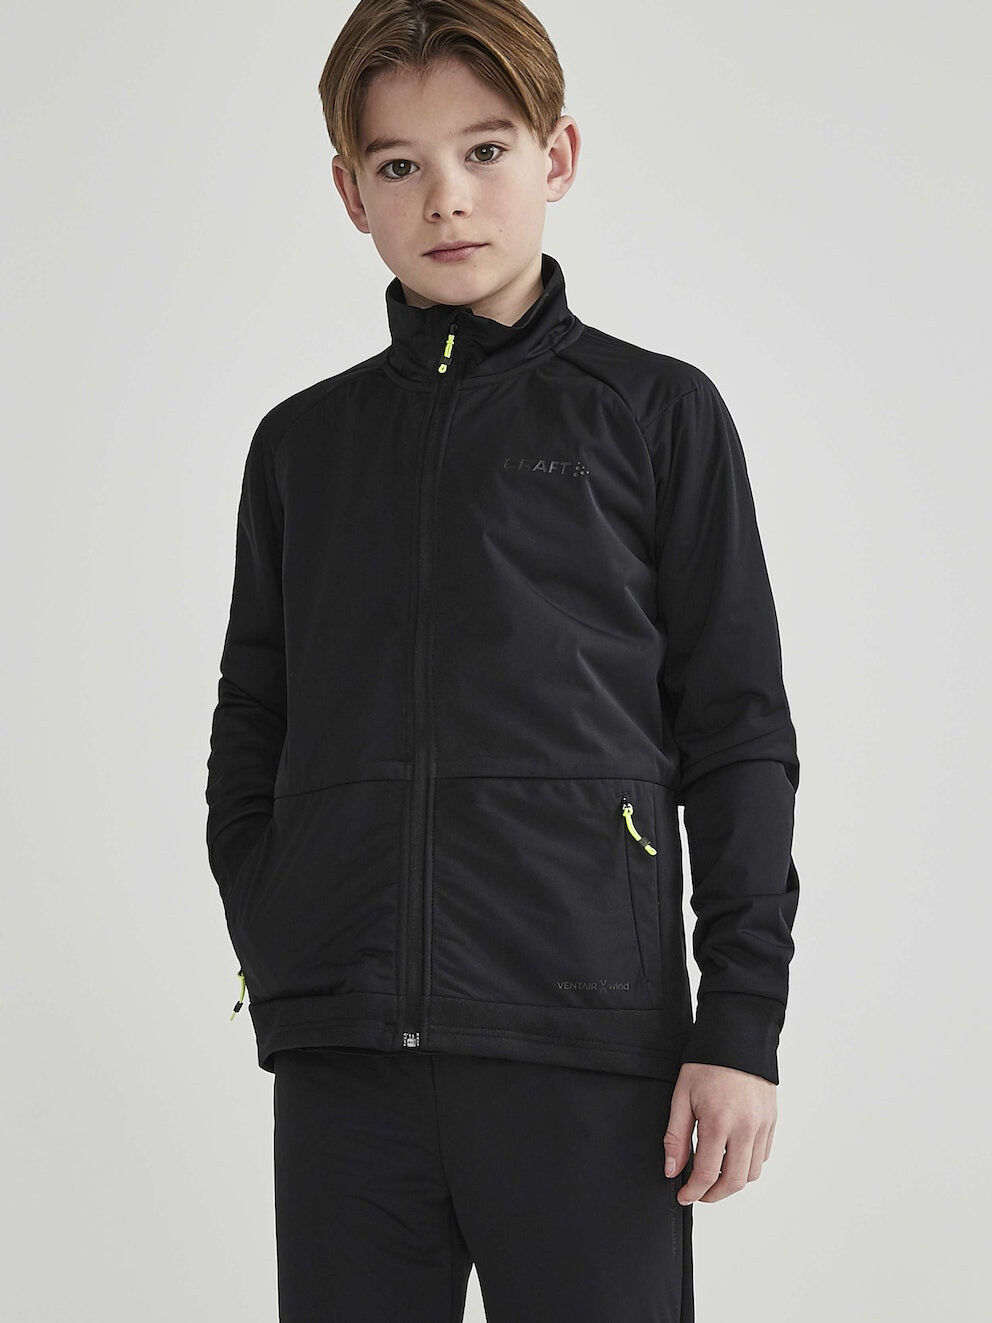 Craft CORE Warm XC Jacket Jr - Cross-country ski jacket - Kid's | Hardloop